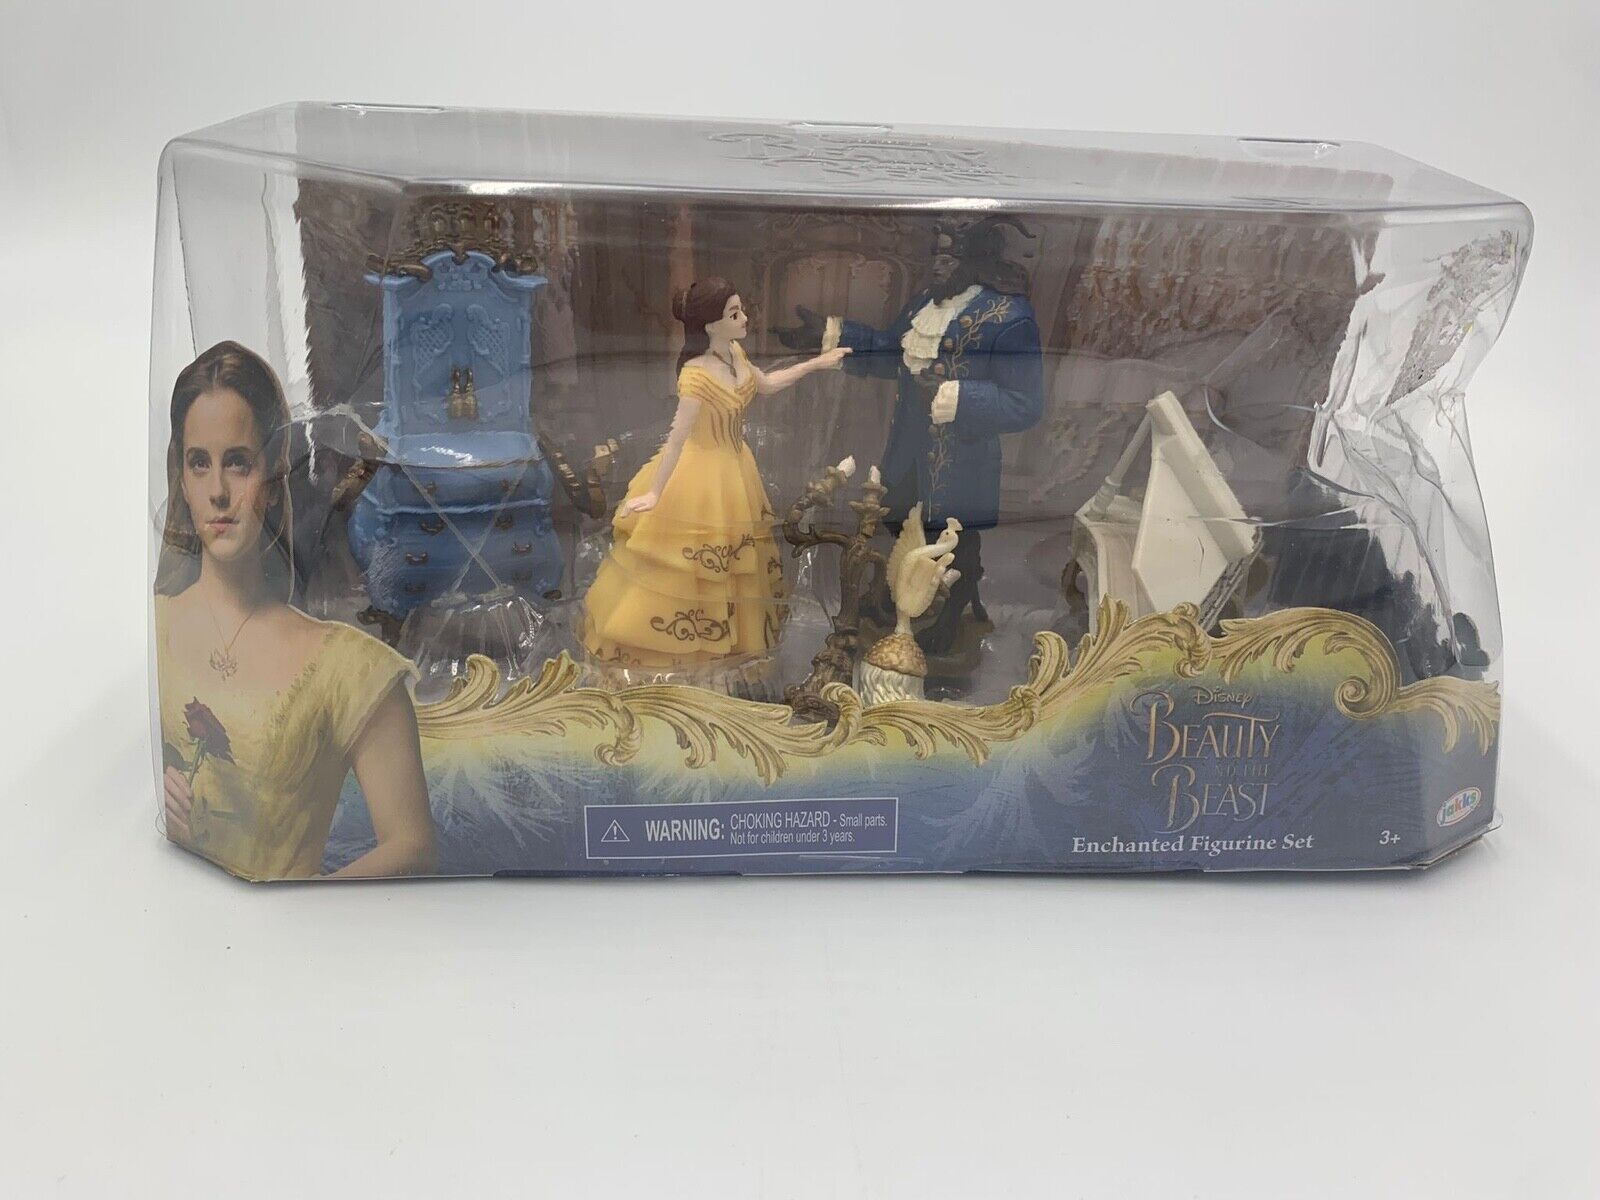 BOX DAMAGE Jakks Pacific Beauty and The Beast Enchanted Figurine Set 2017